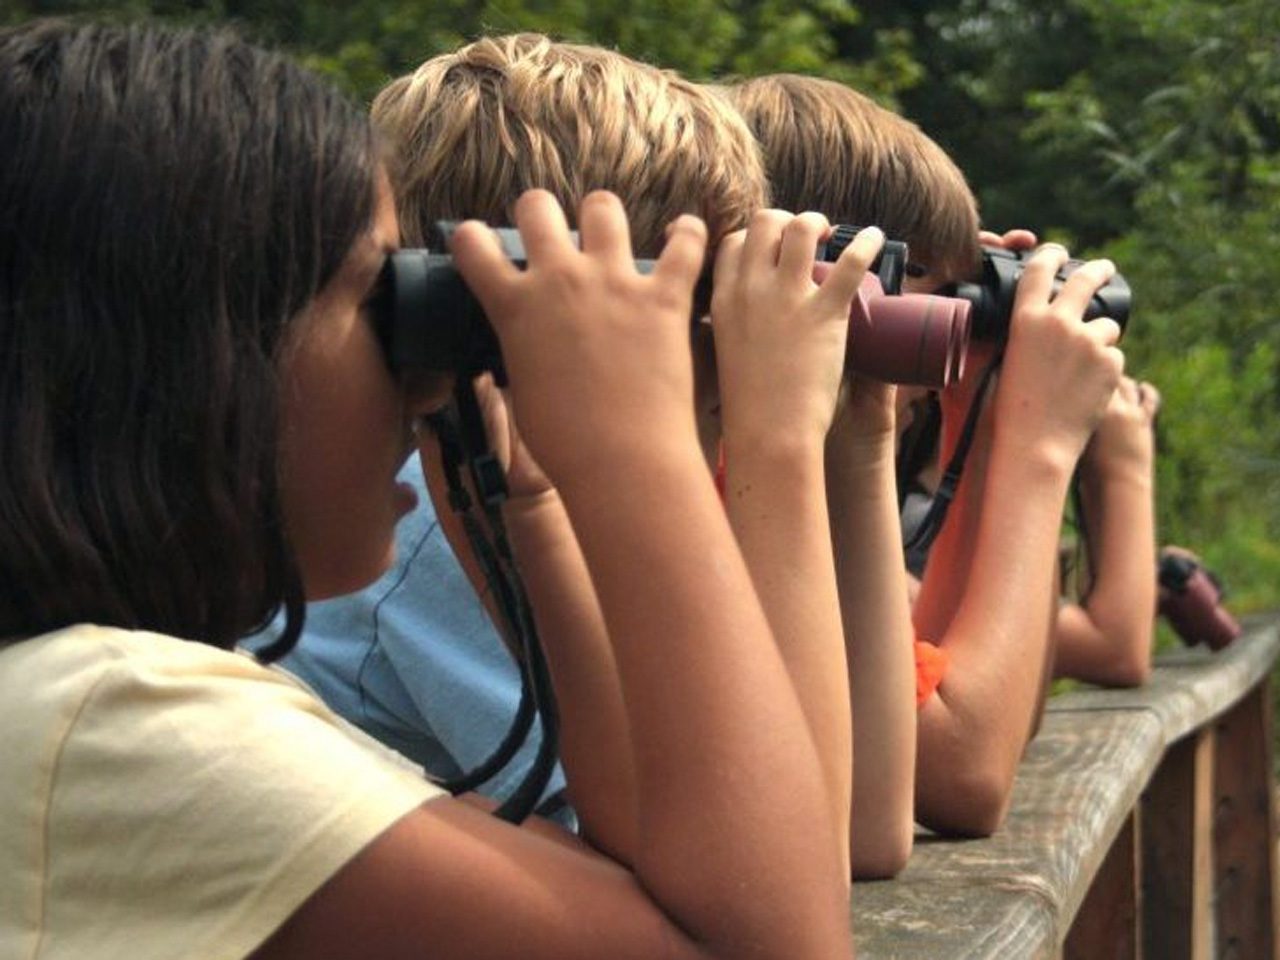 Kids looking through binoculars